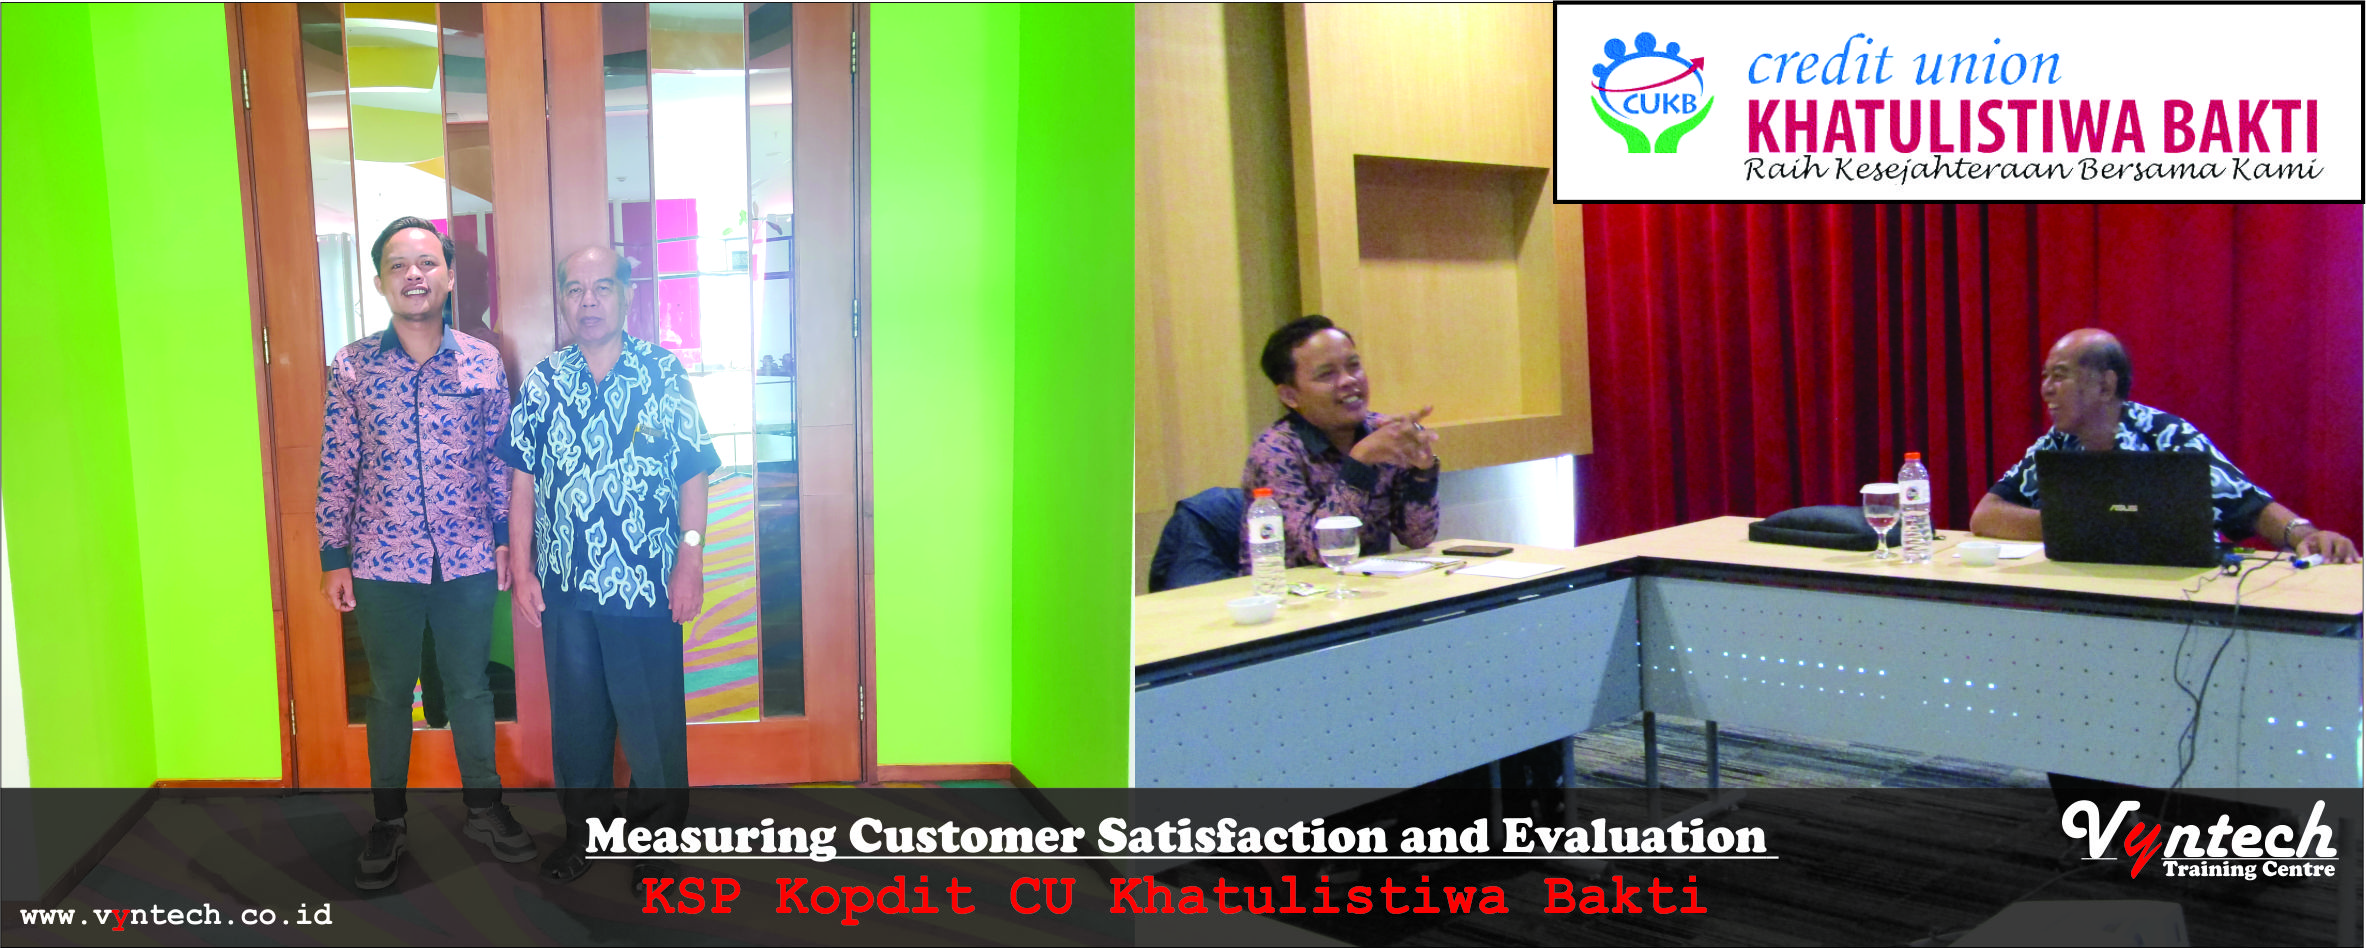 20200115 Training Measuring Customer Satisfaction and Evaluation - KSP Kopdit CU Khatulistiwa Bakti